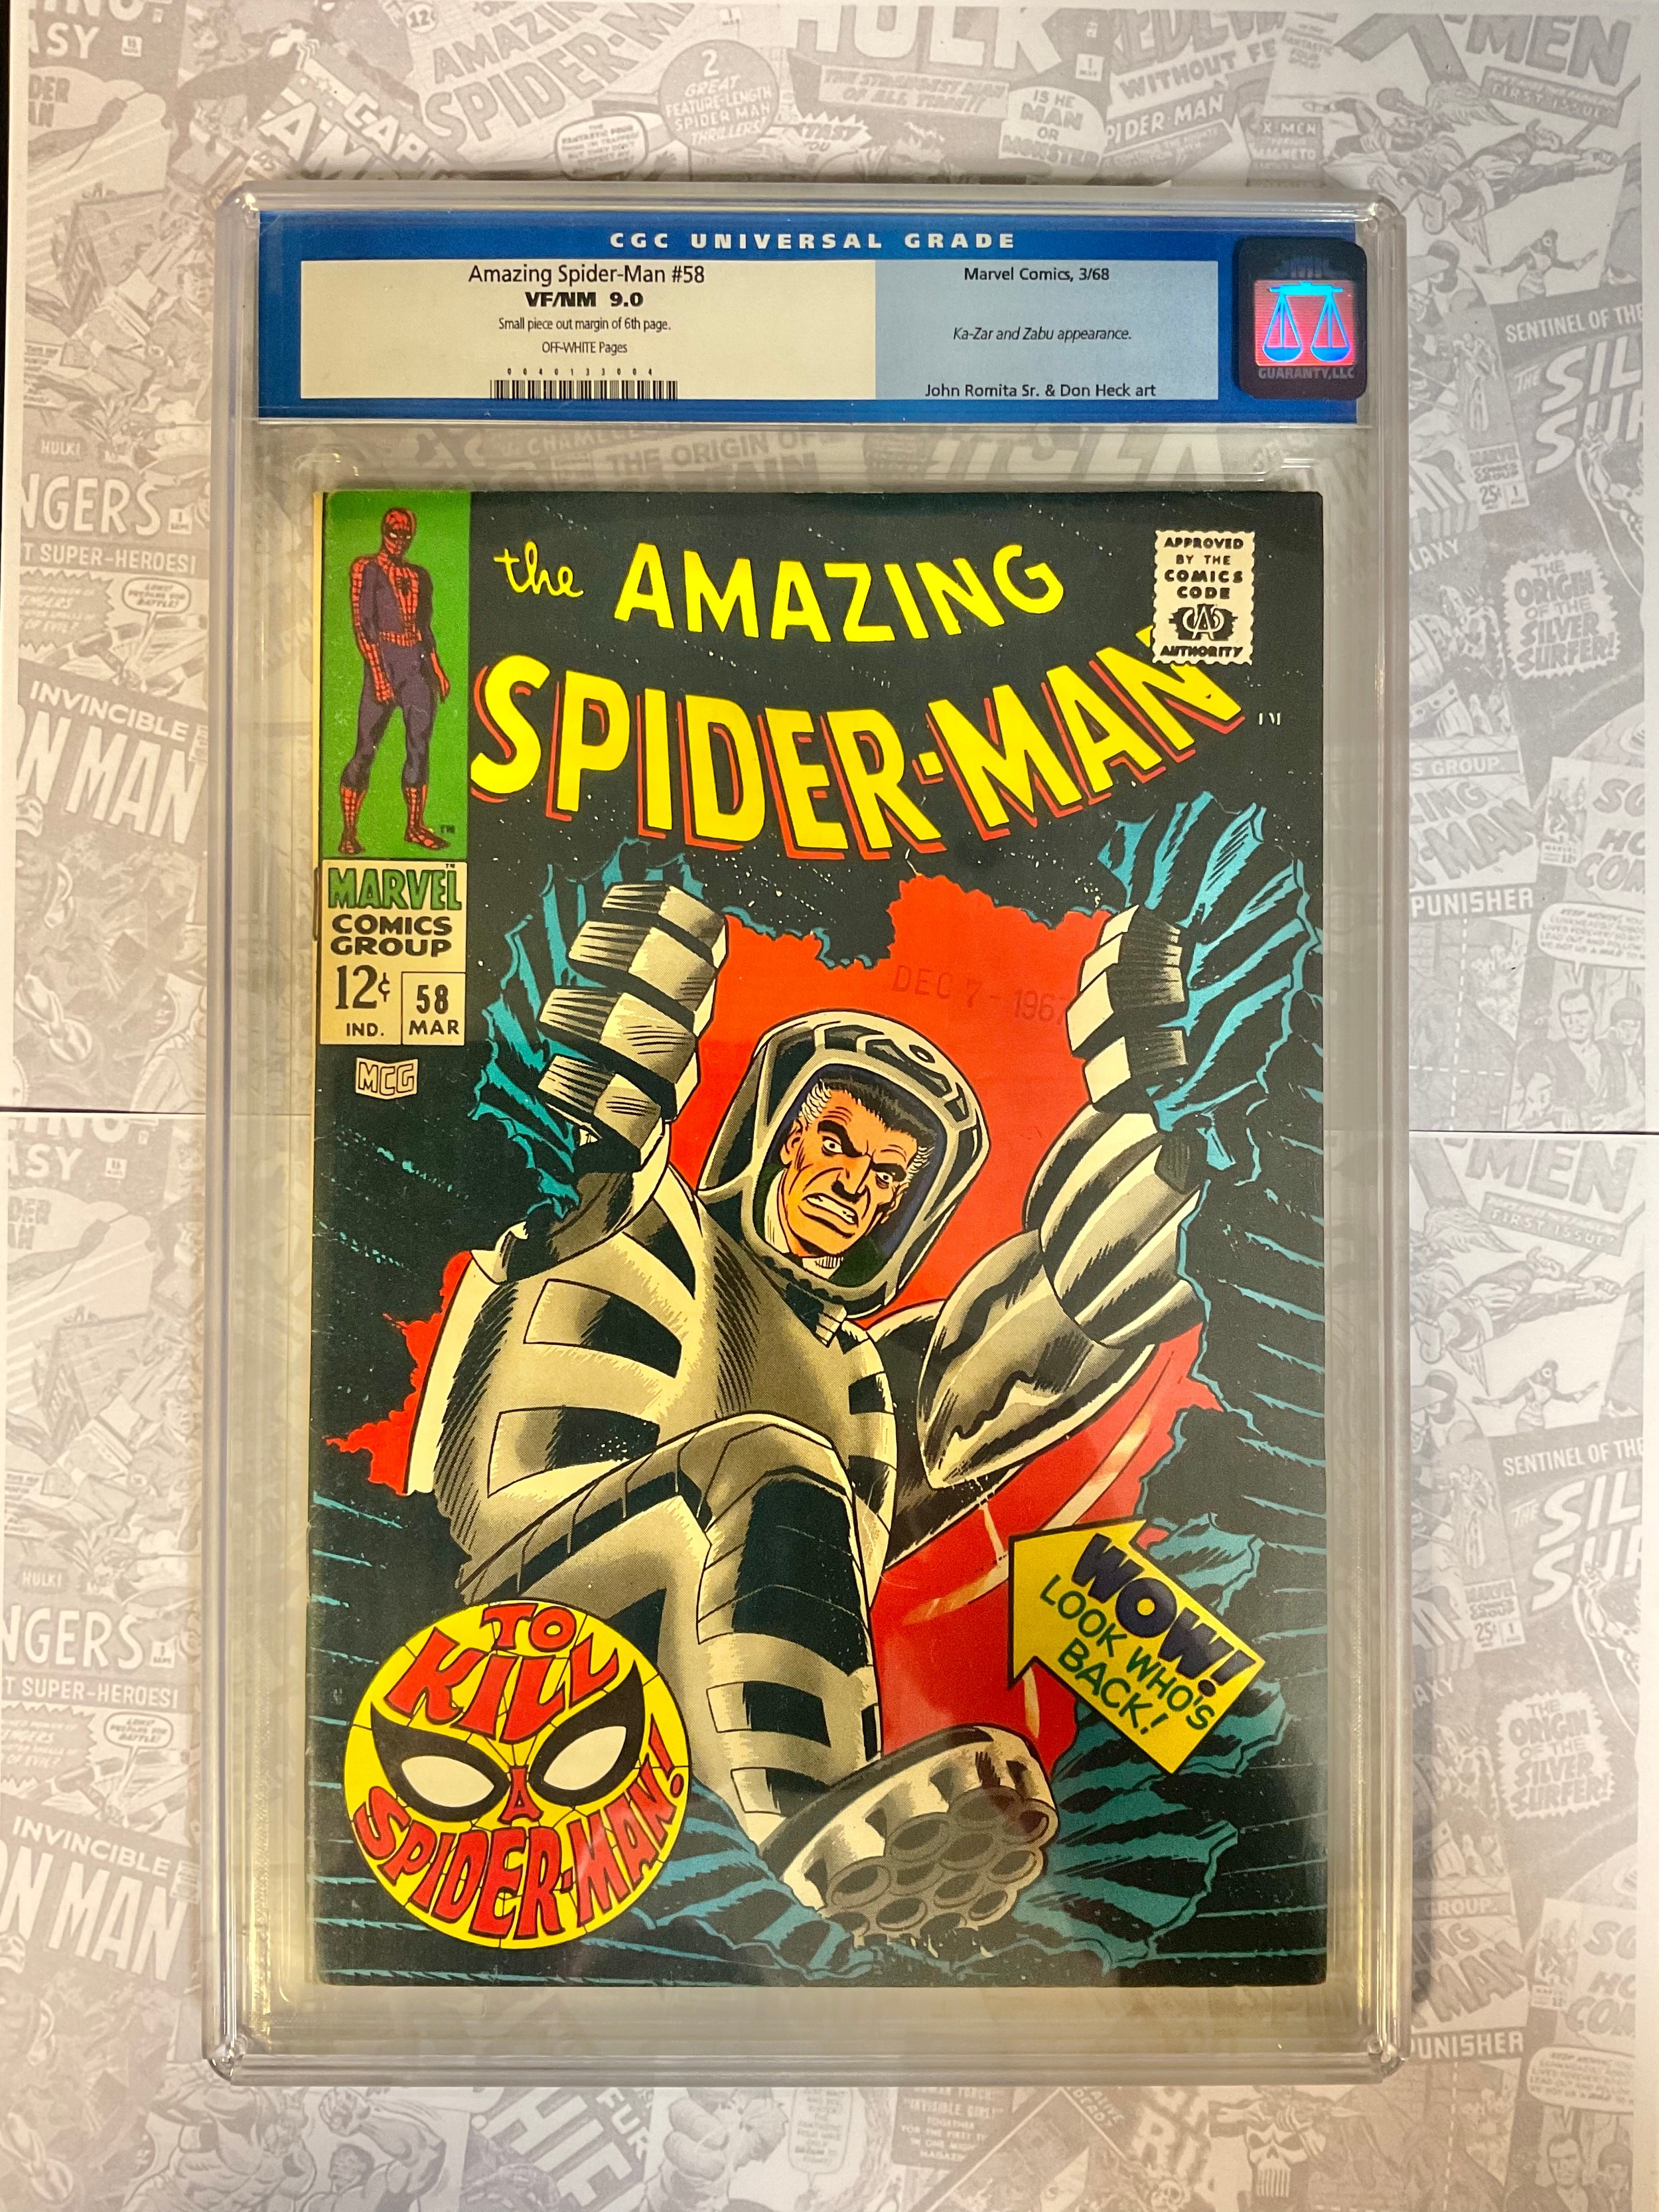 Amazing Spider-Man #58 (1968) CGC Graded 9.0 VFN / NM. John Romita Snr artwork. Silver Age Marvel